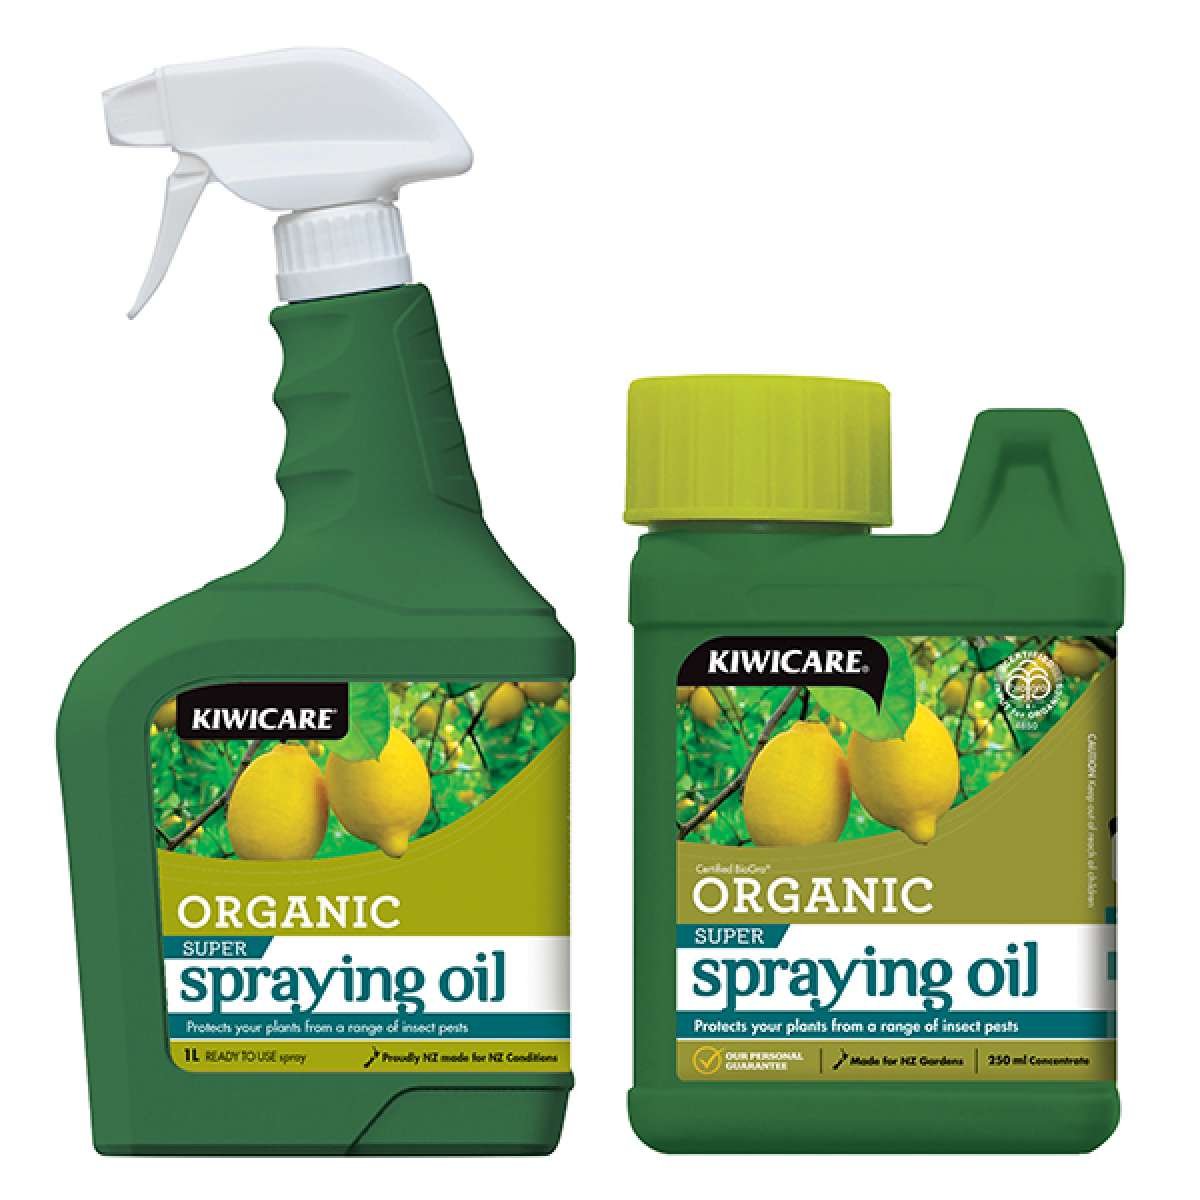 Organic-Super-Spraying-Oil.jpg